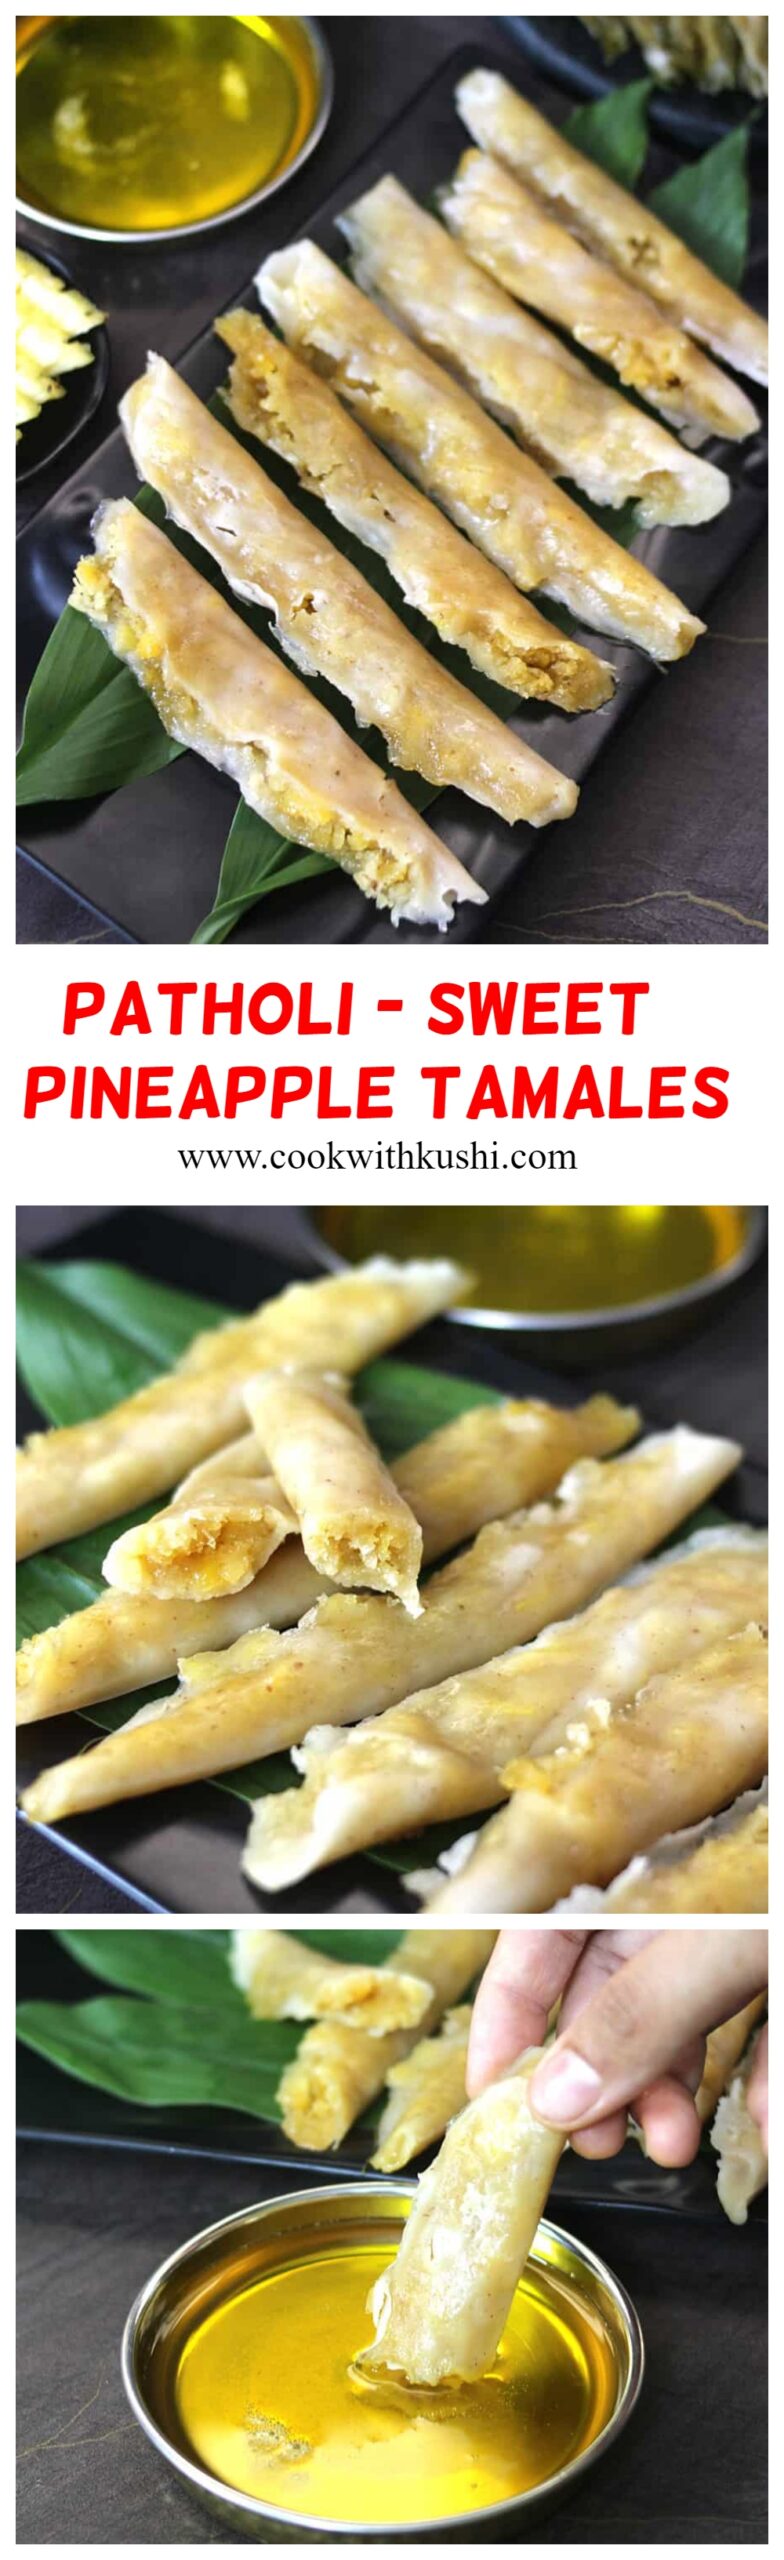 How to make sweet tamales at home #tamales #pineappledessert #Patholi